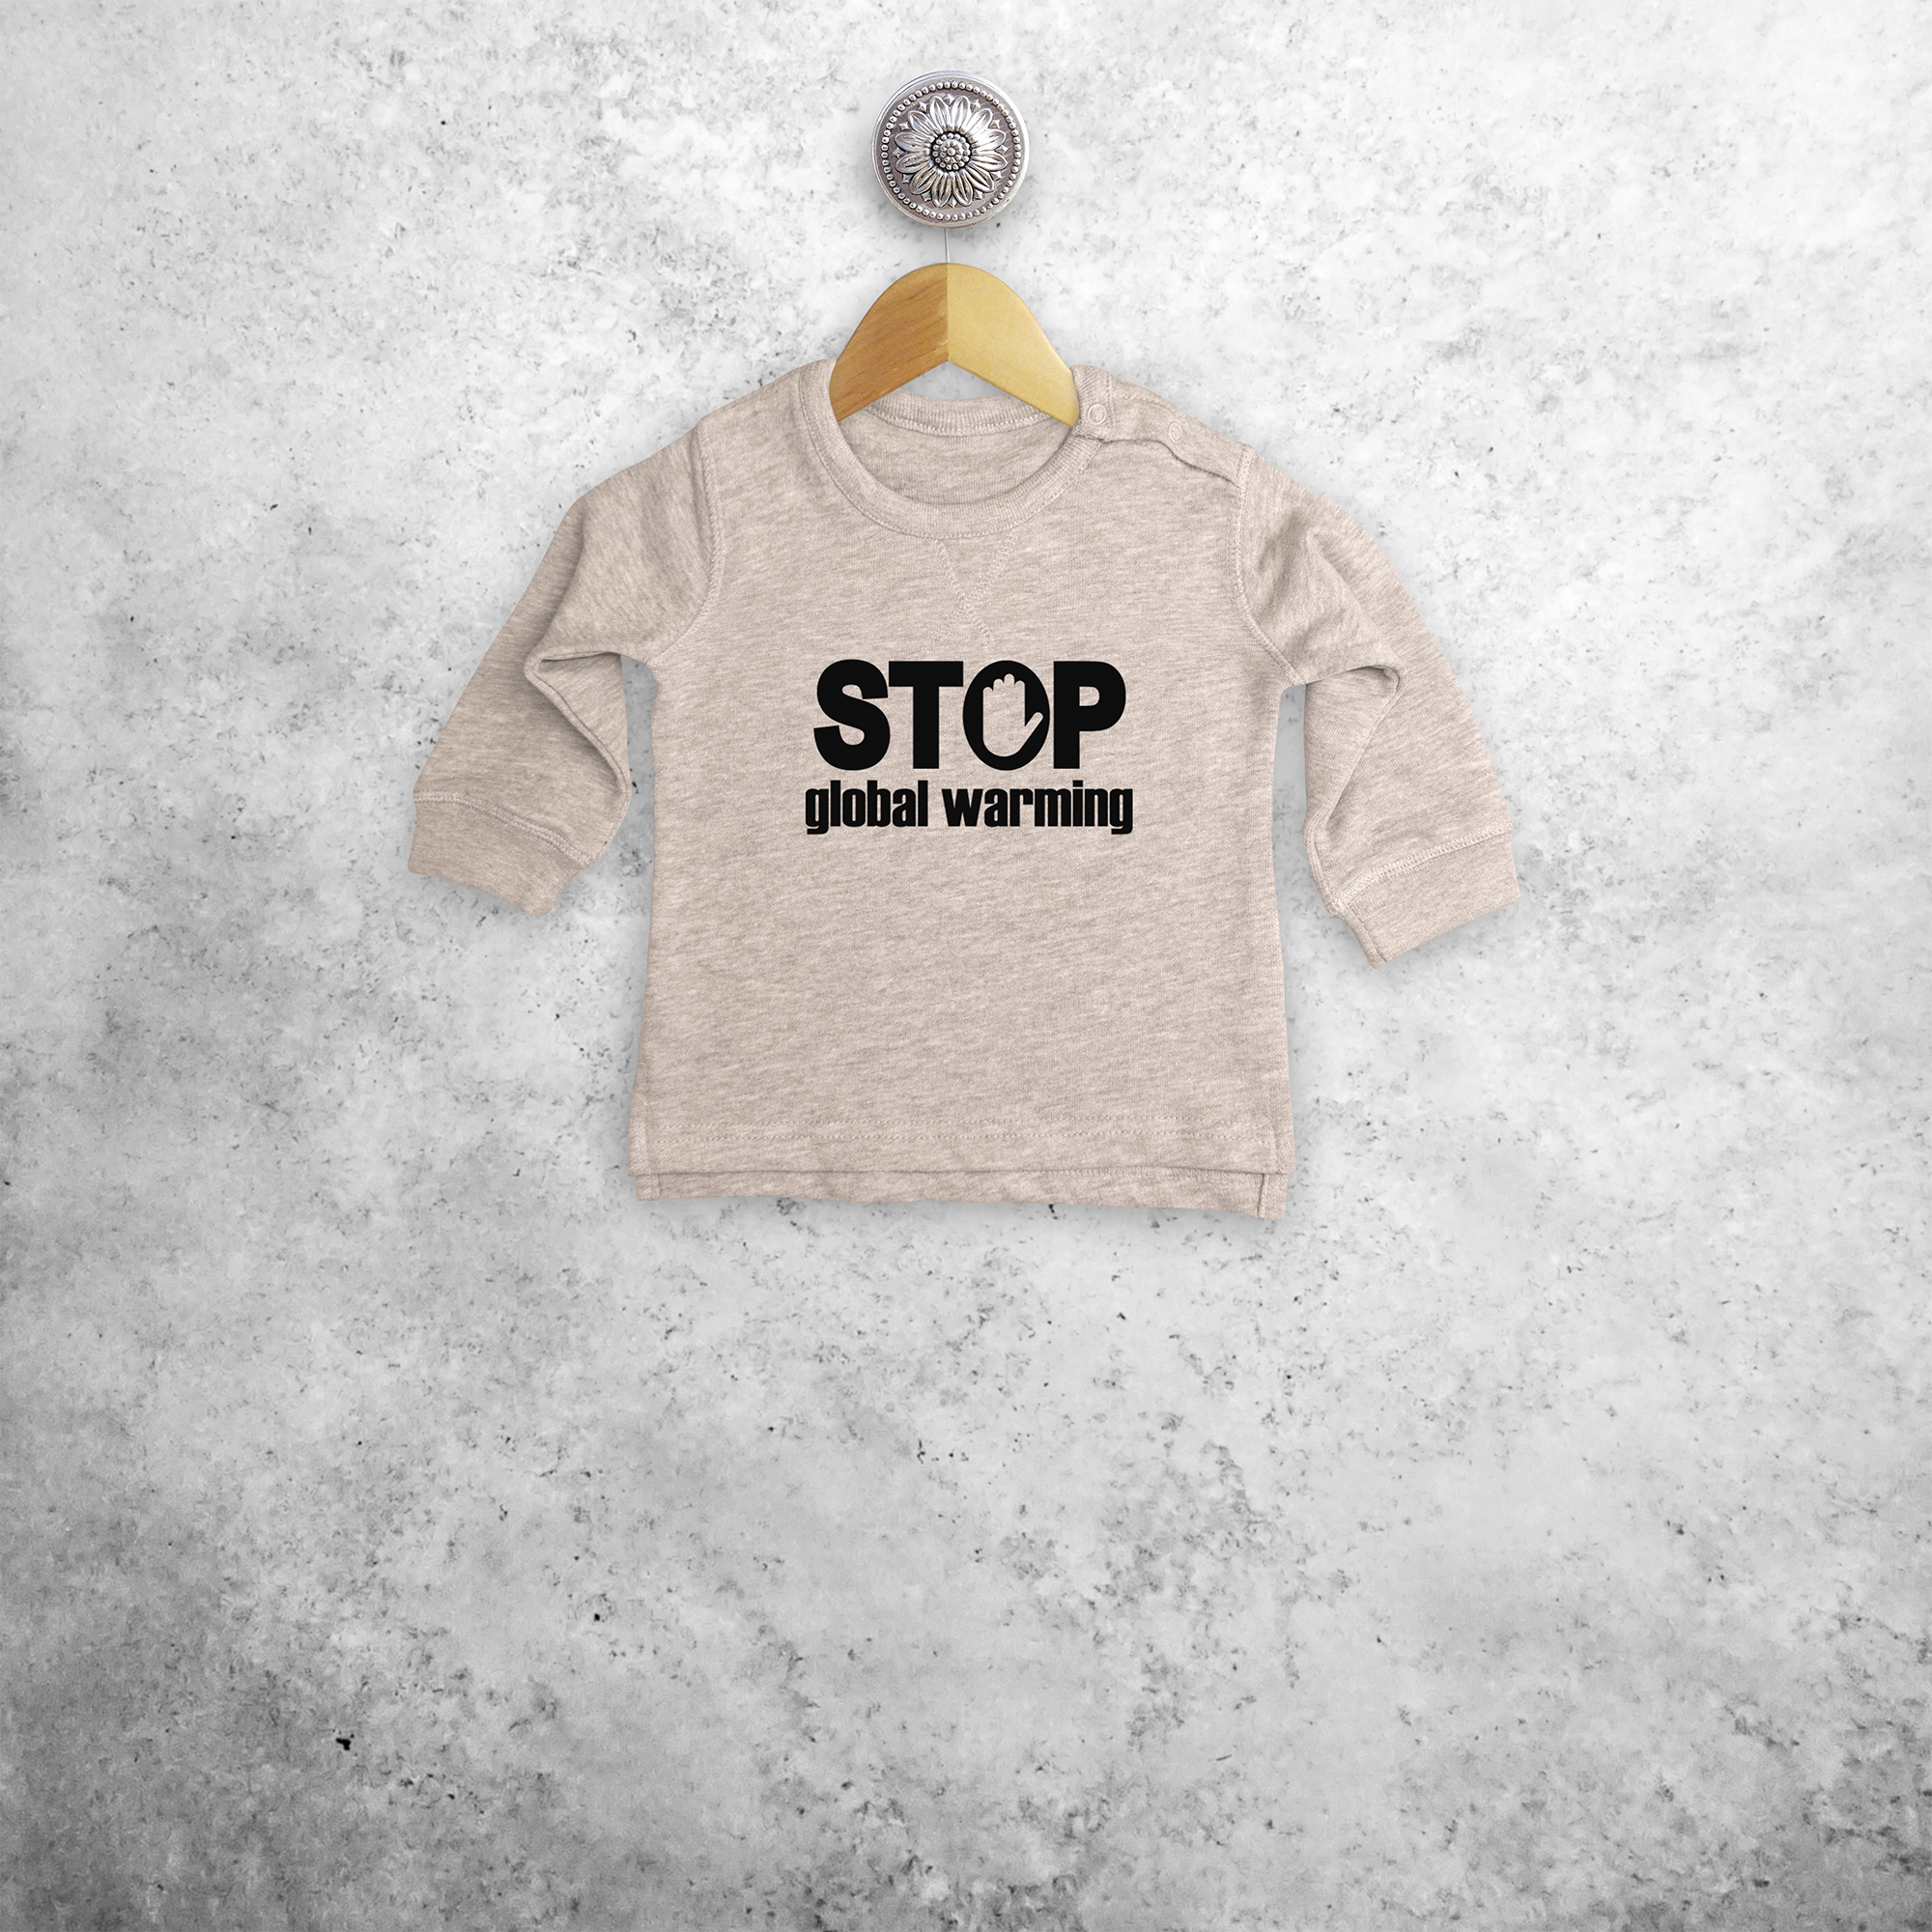 'Stop global warming' baby trui